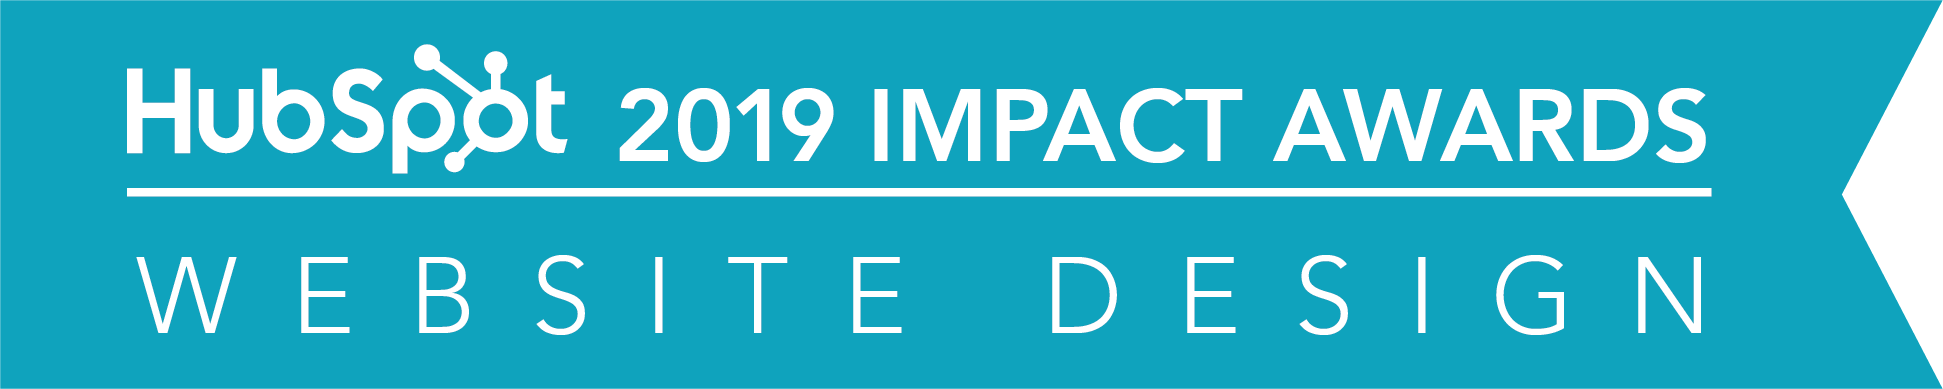 Hubspot_ImpactAwards_2019_WebsiteDesign-02 (3)